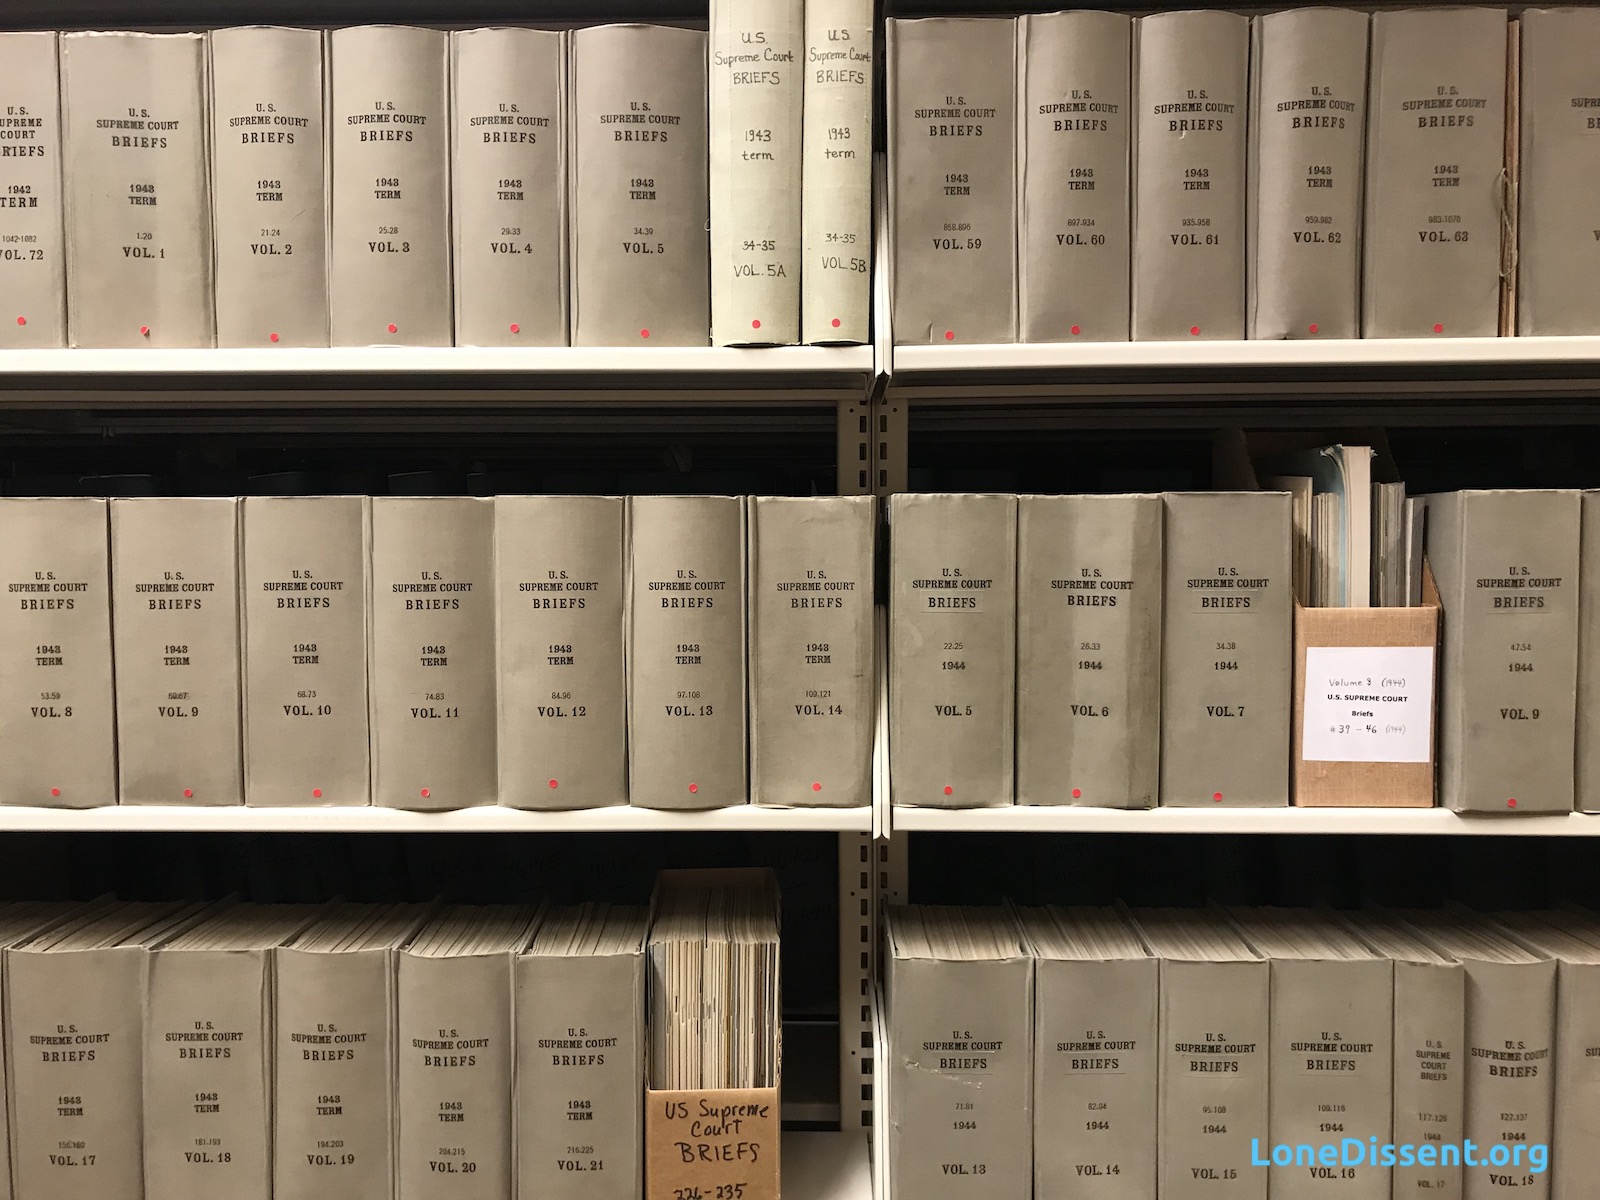 U.W. Law Library Shelves